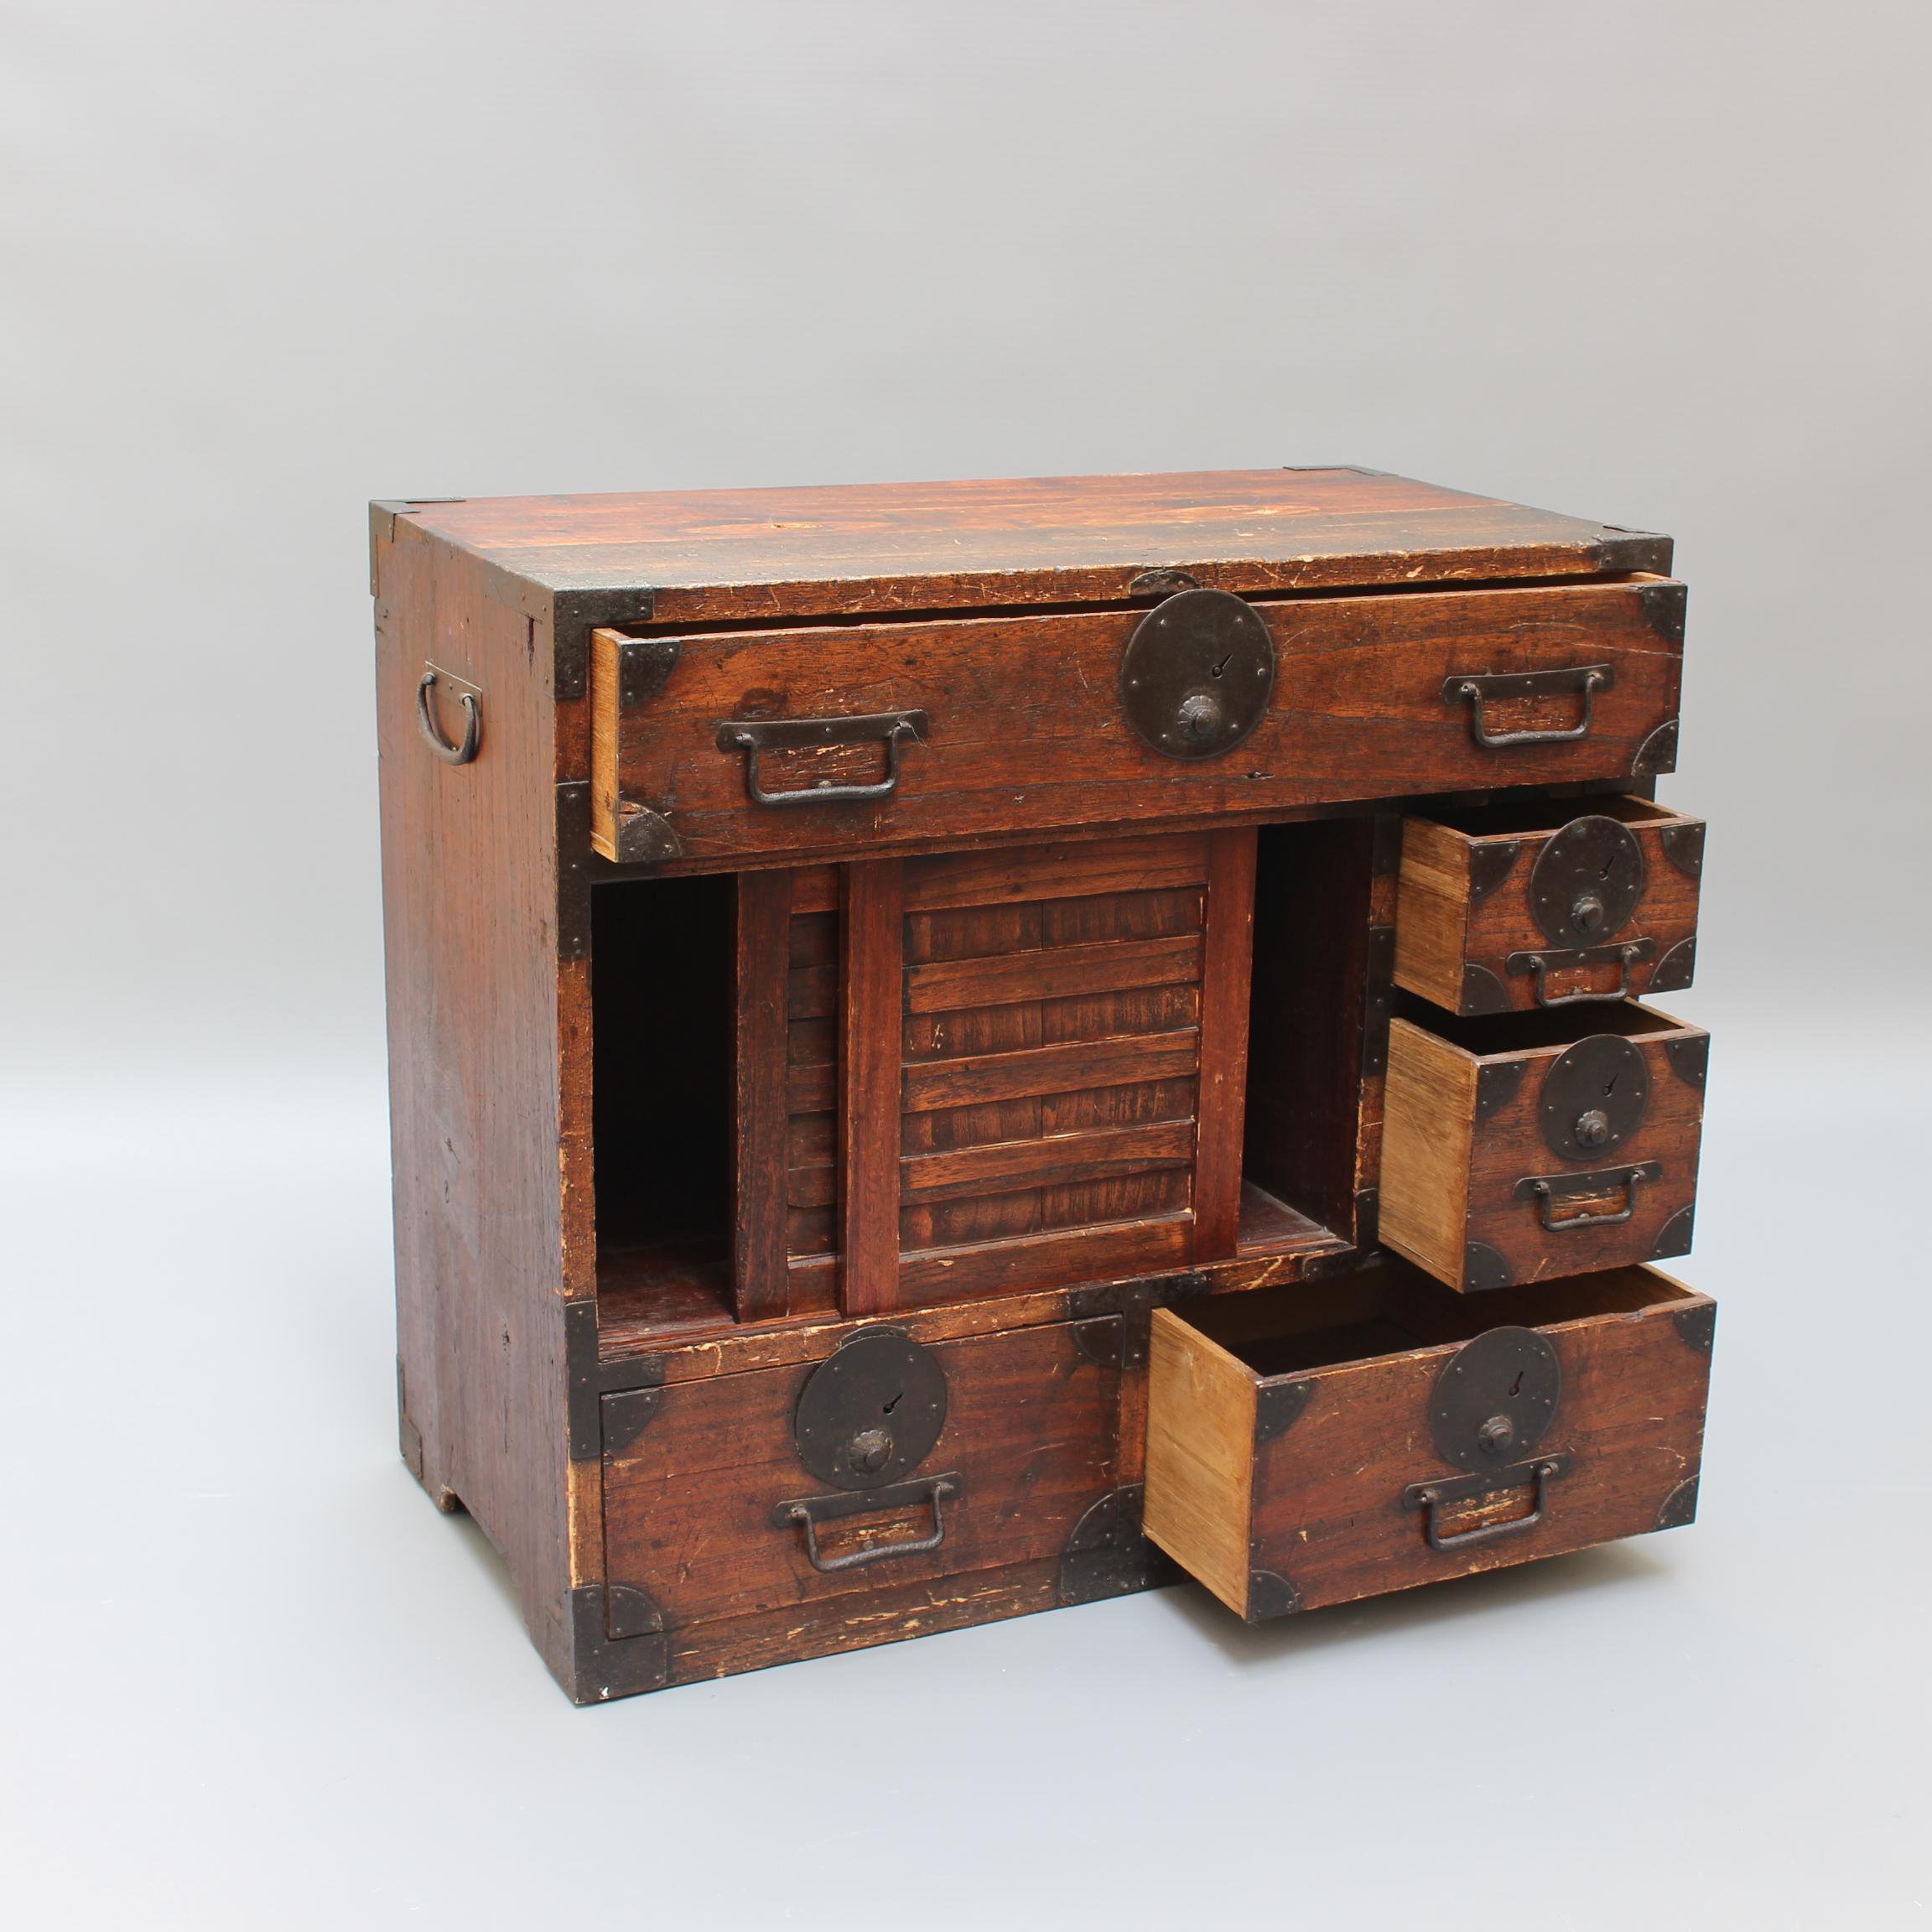 Wood Japanese Tansu Storage Chest (19th Century - Edo Period) Wabi Sabi For Sale